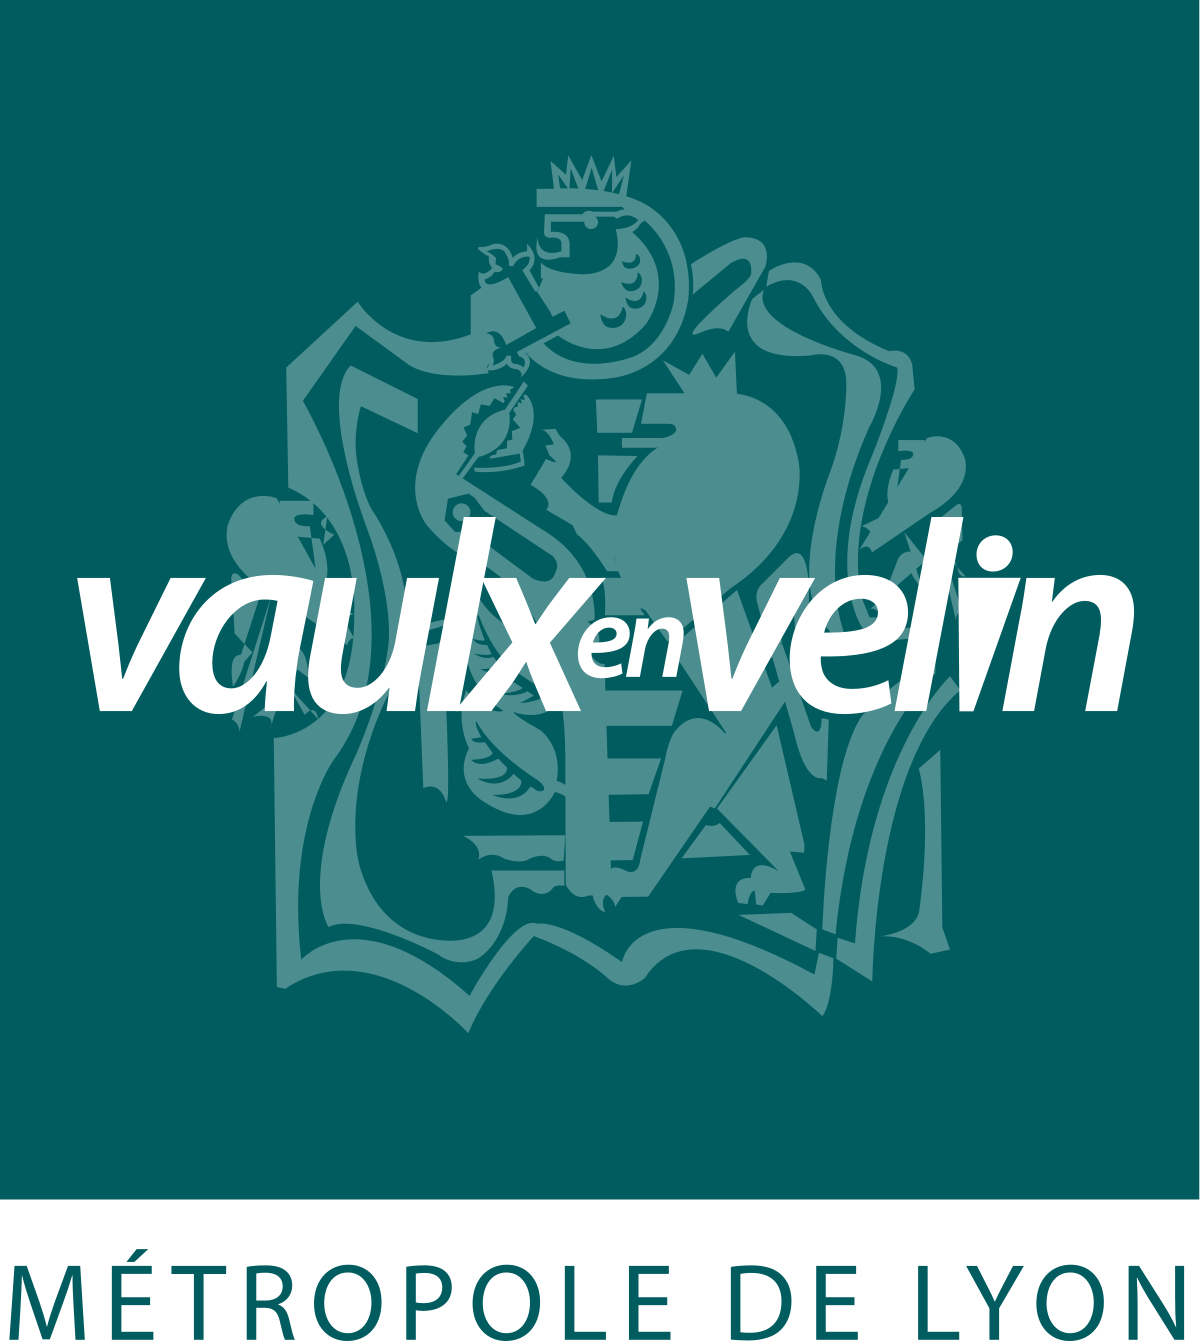 Ville de Vaulx-en-Velin